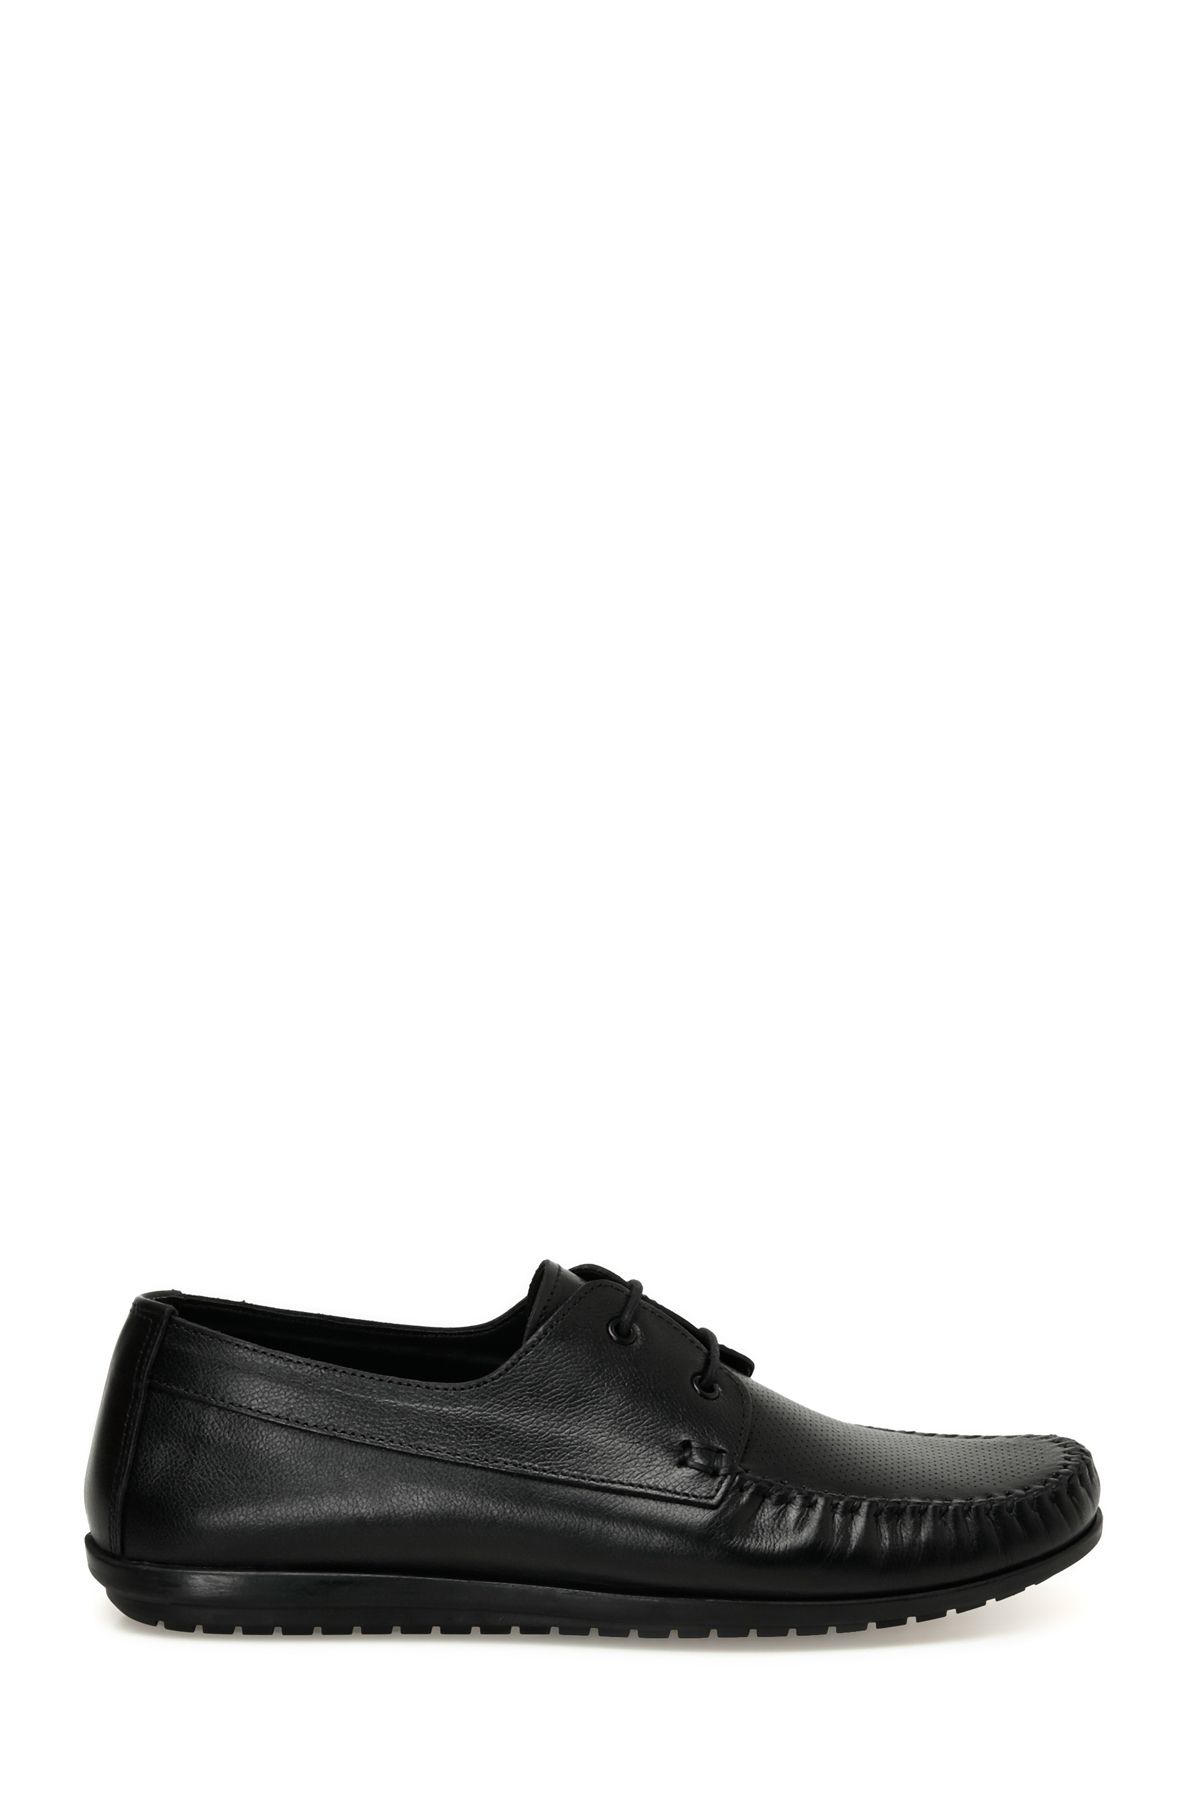 Flogart SADEN-B 4FX Siyah Erkek Rahat Ayakkabı